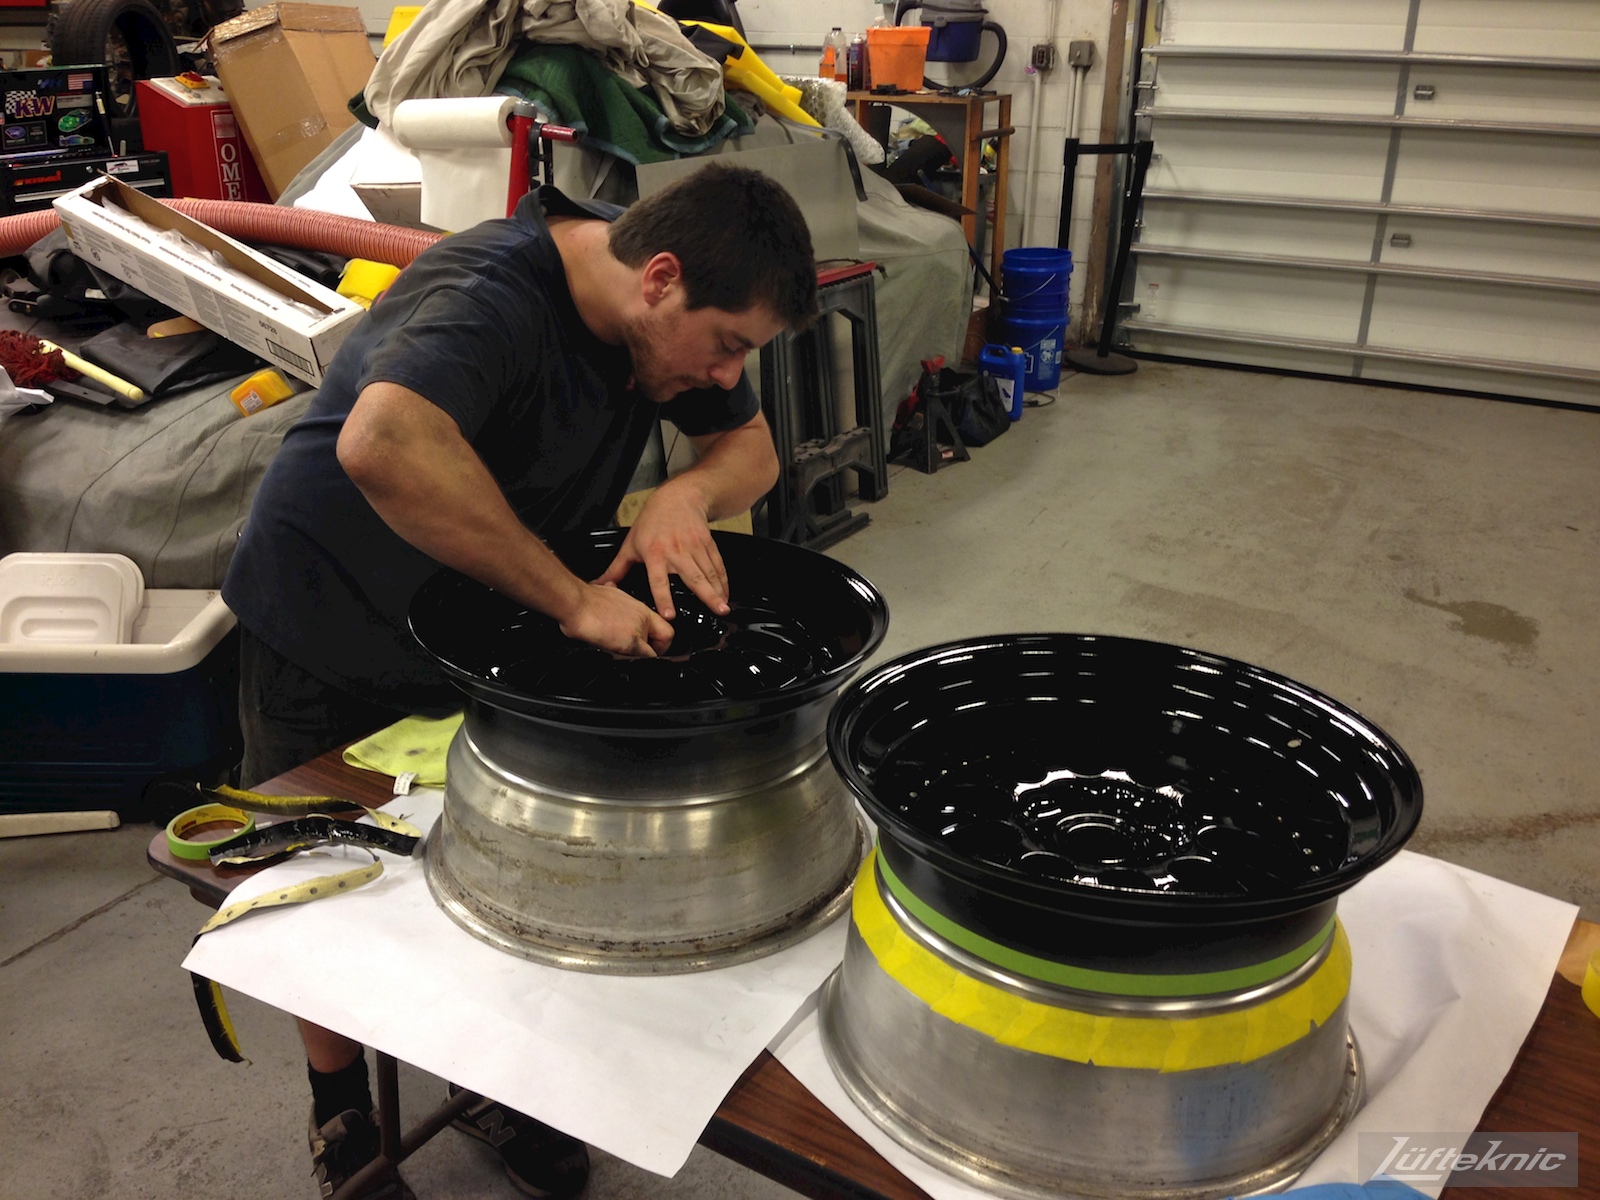 A Lüfteknic employee assembles gloss-black painted wheels for projectstuka.